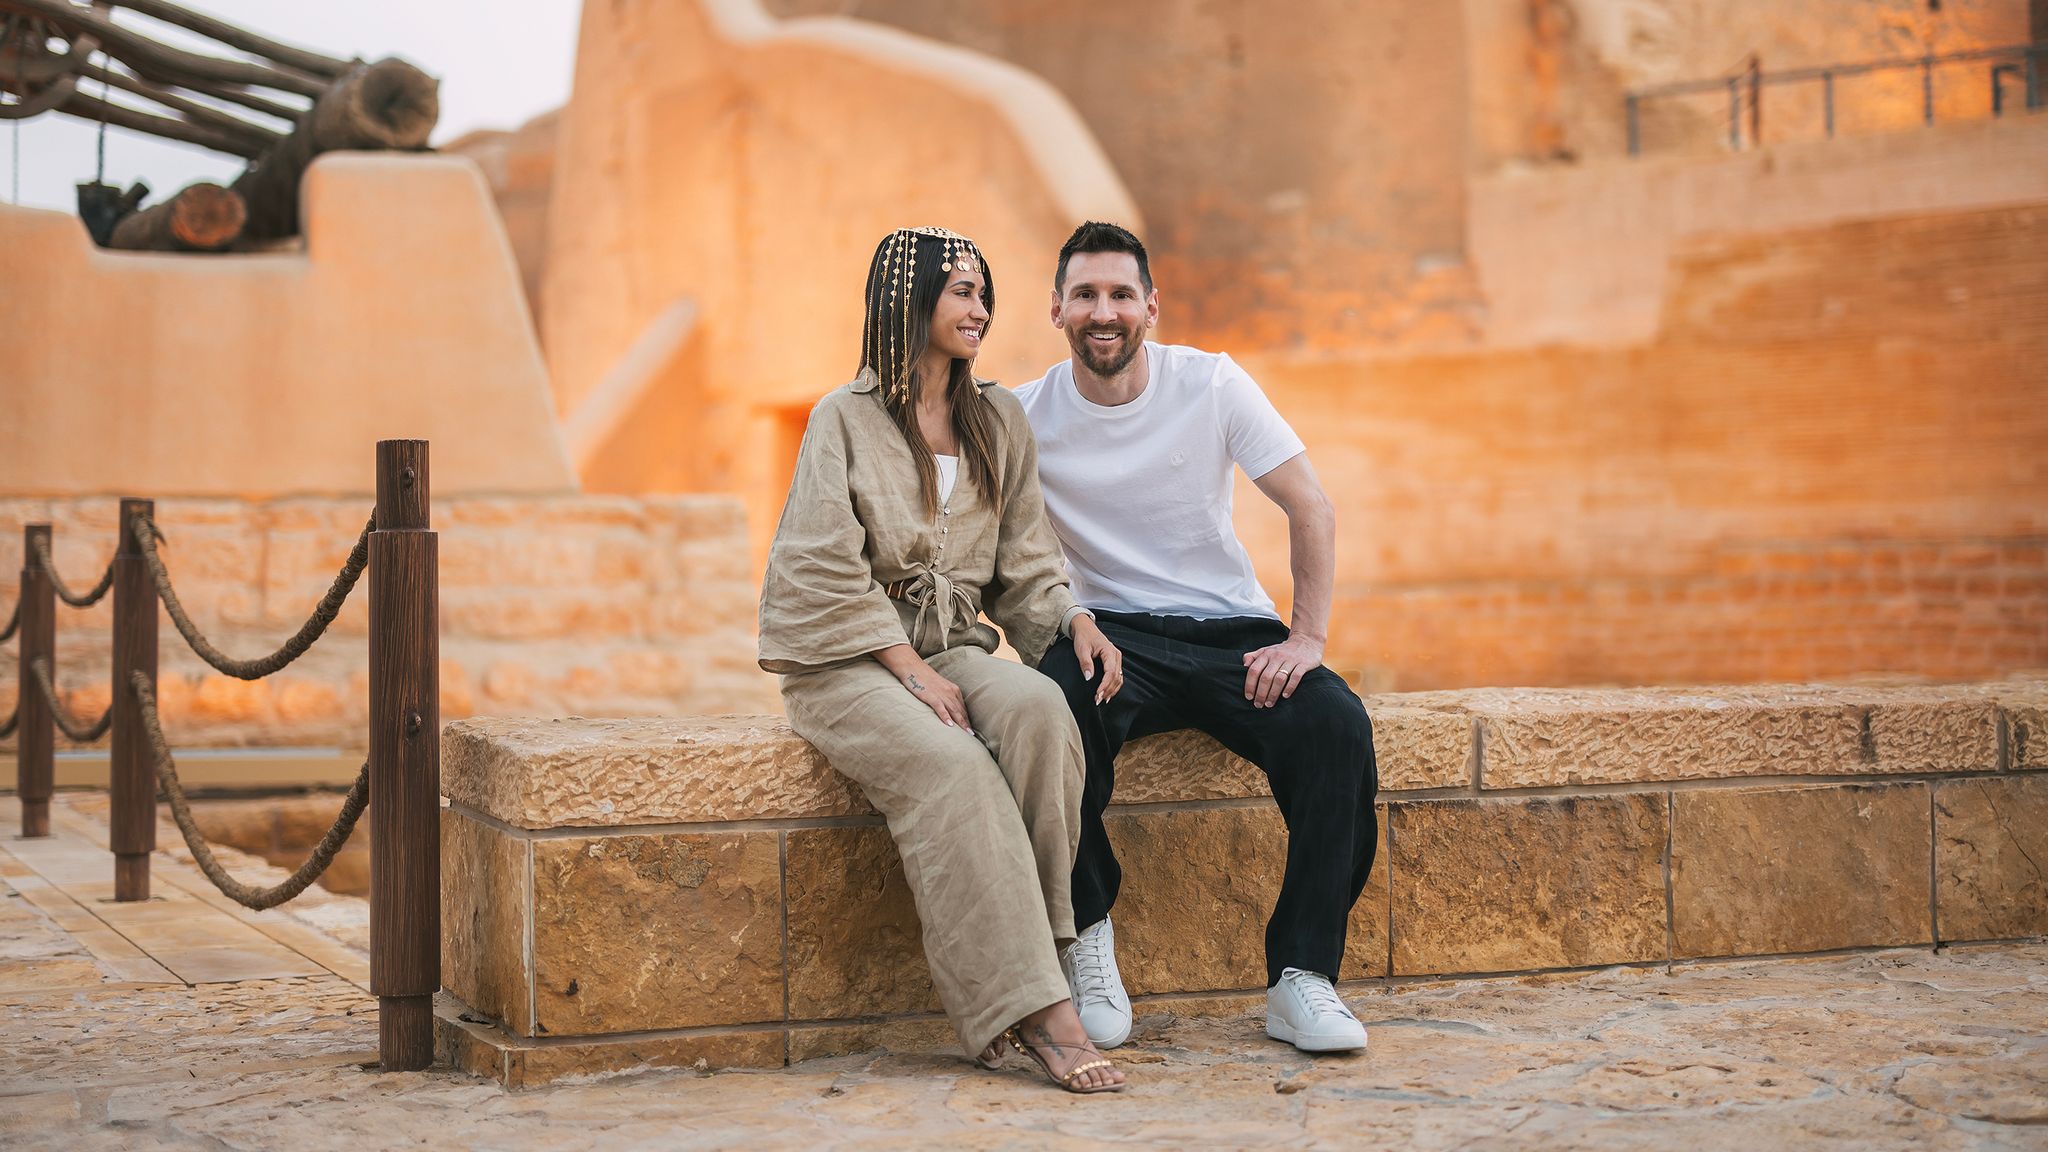 messi tourism saudi arabia